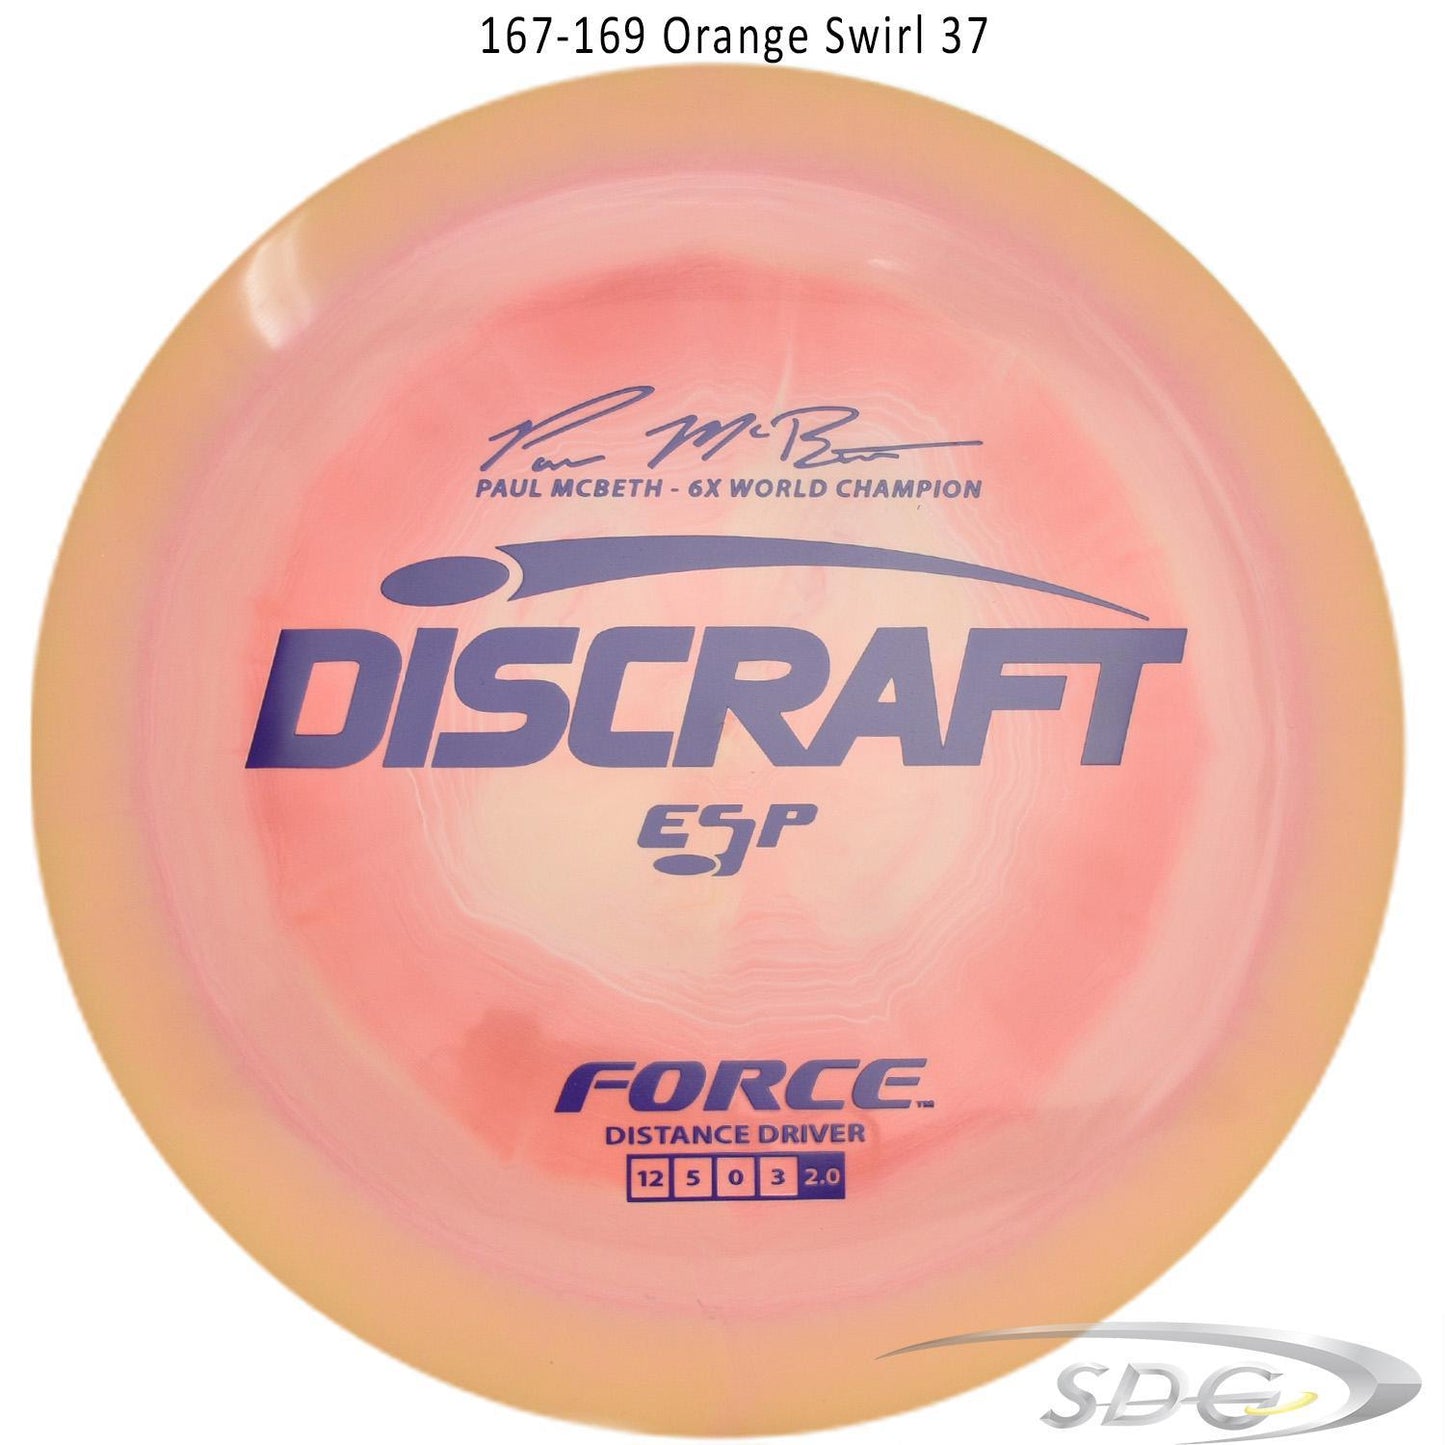 discraft-esp-force-6x-paul-mcbeth-signature-disc-golf-distance-driver 167-169 Orange Swirl 37